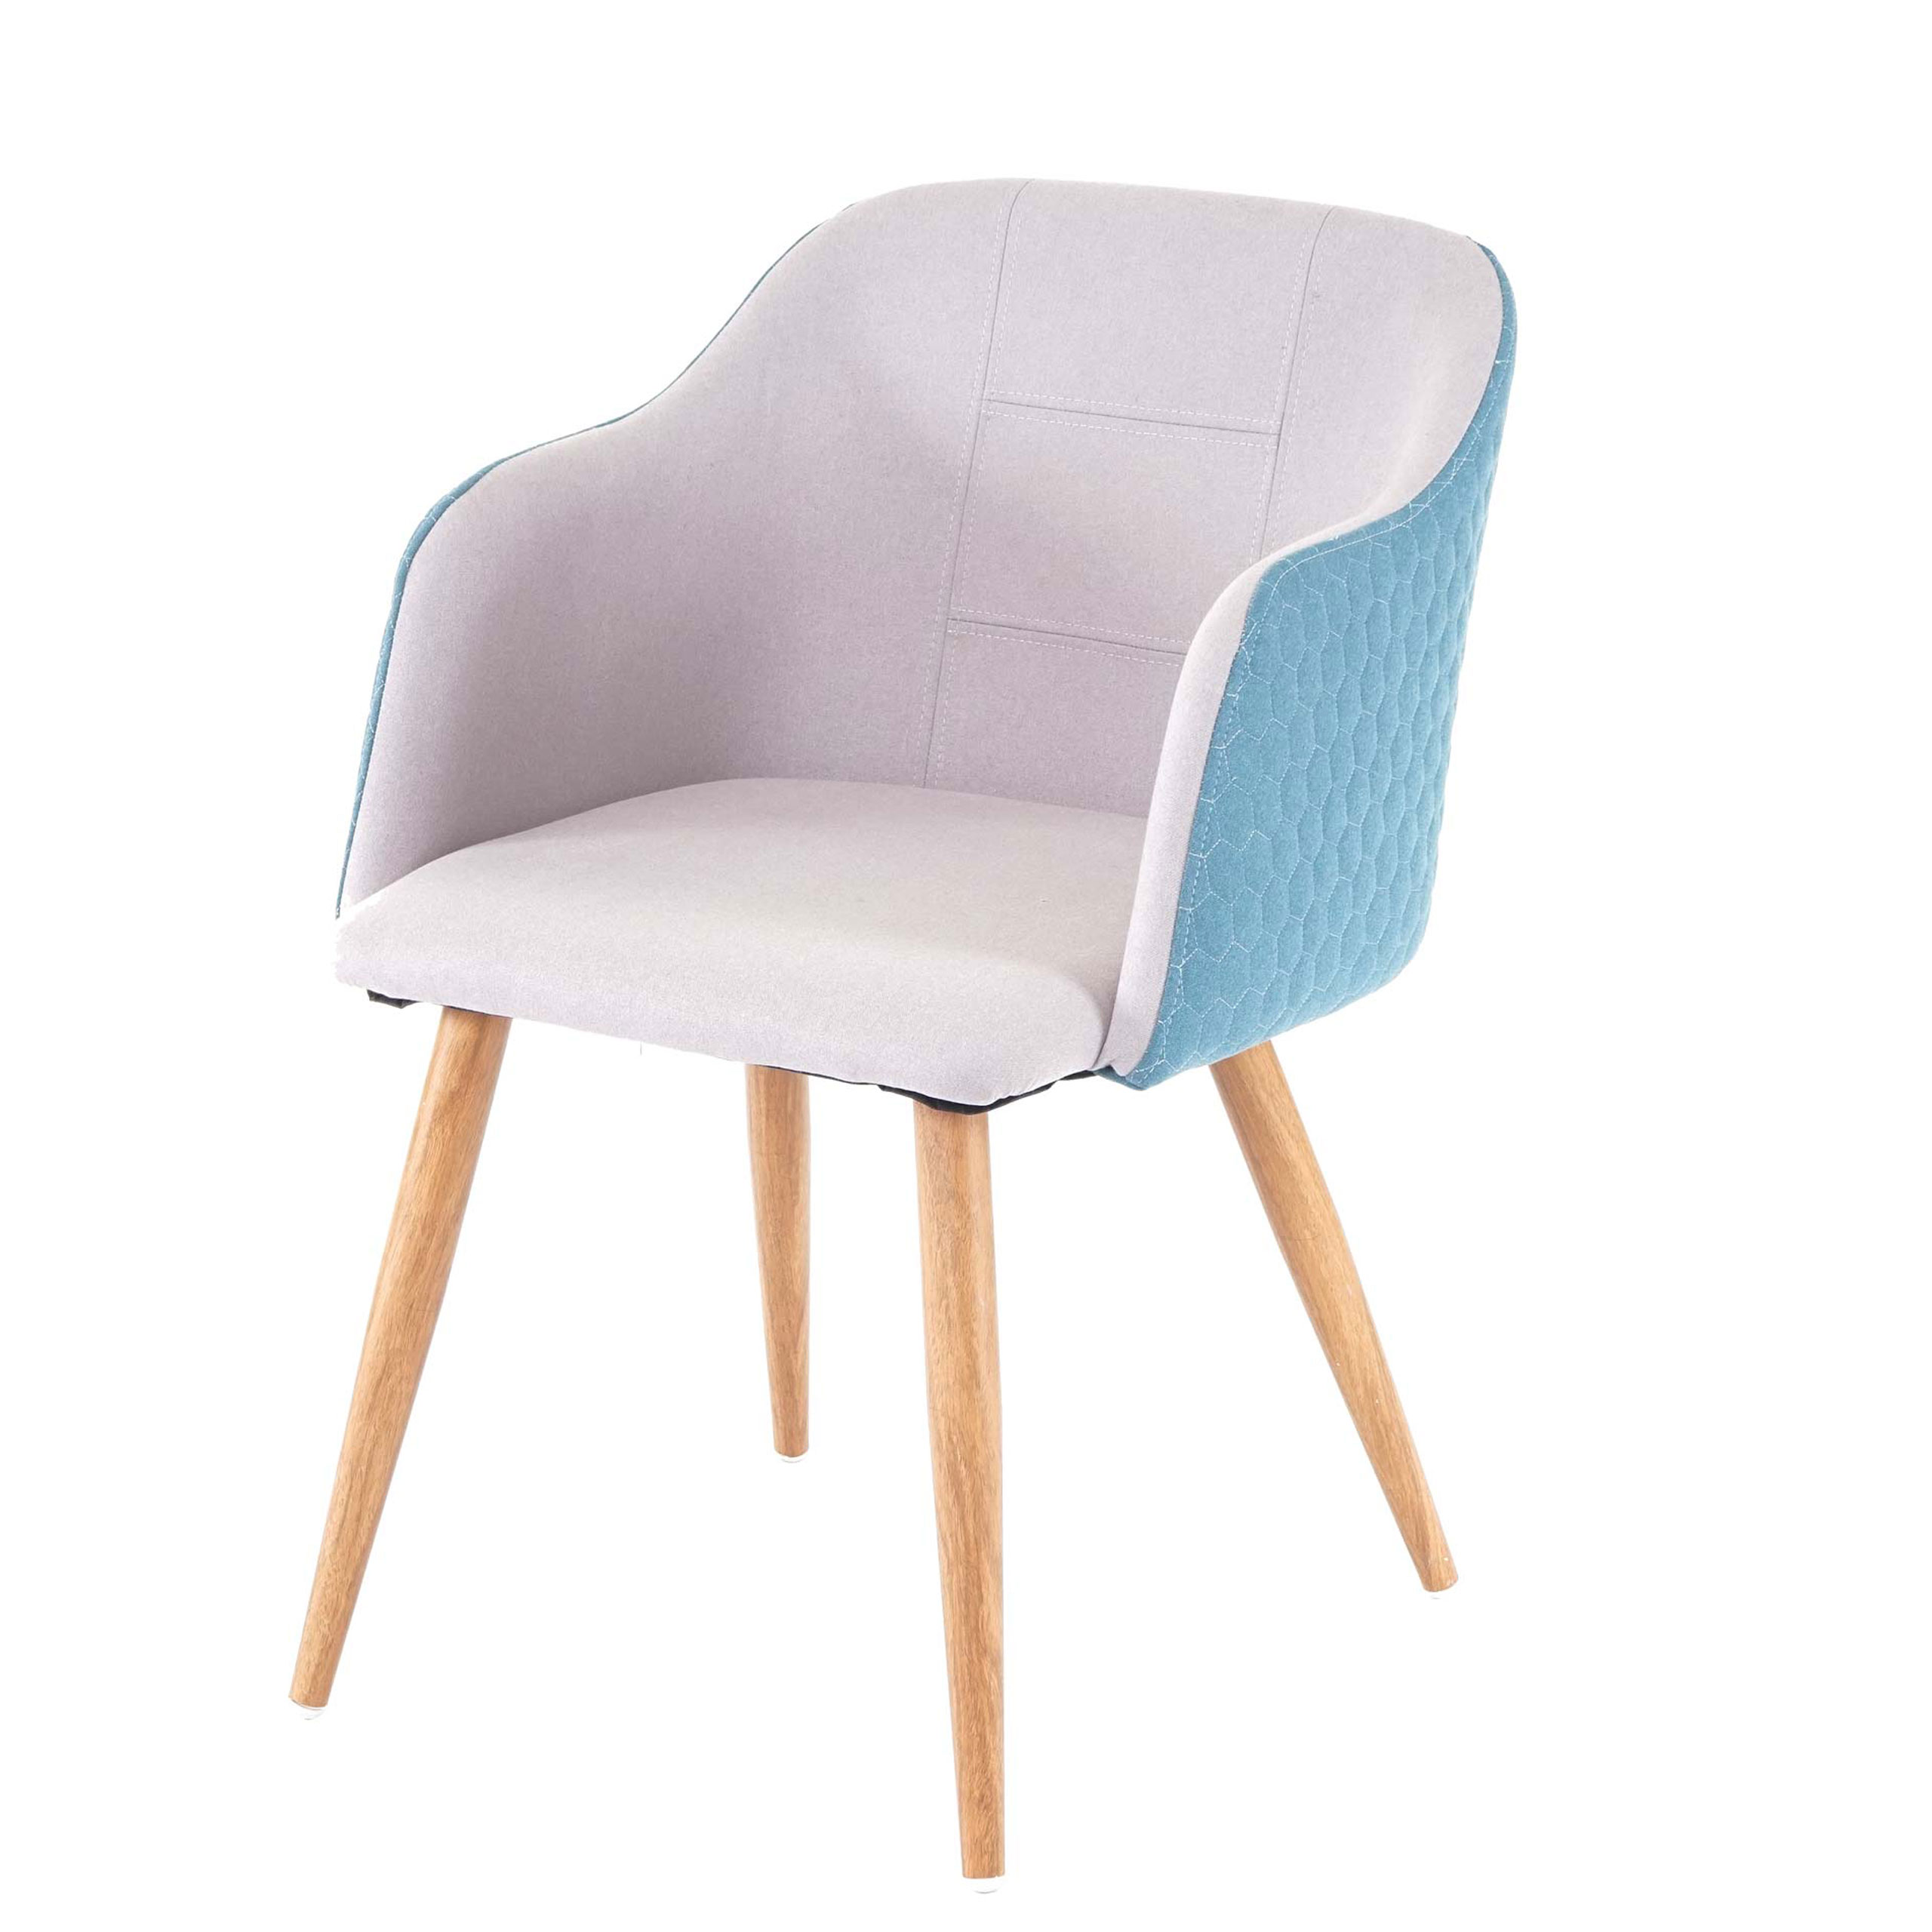 Bambus Stuhl mit Hohe Rückenlehne Camping Stuhl Modernes Design 